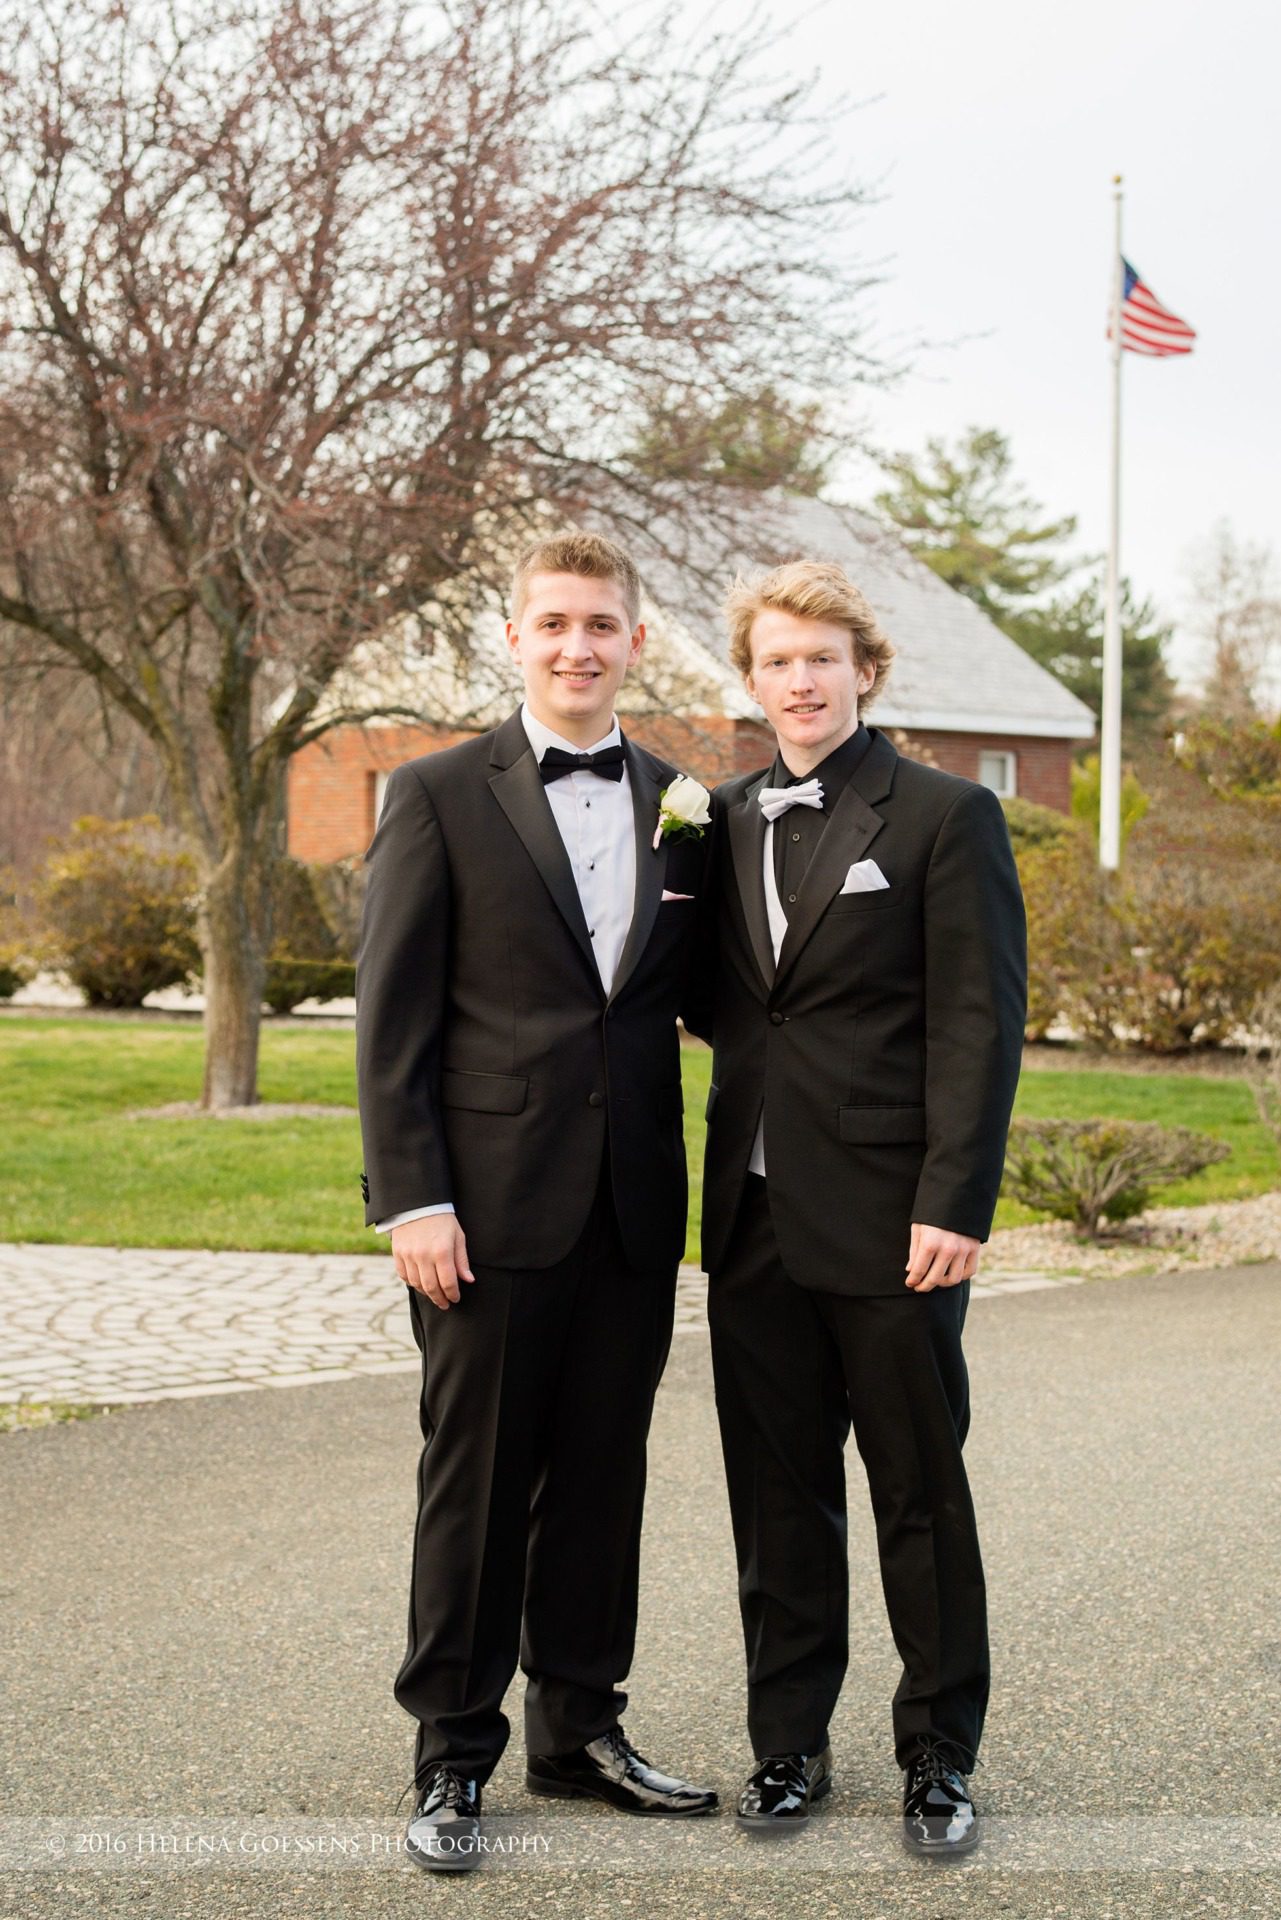 Two senior blond boys in black tuxedos